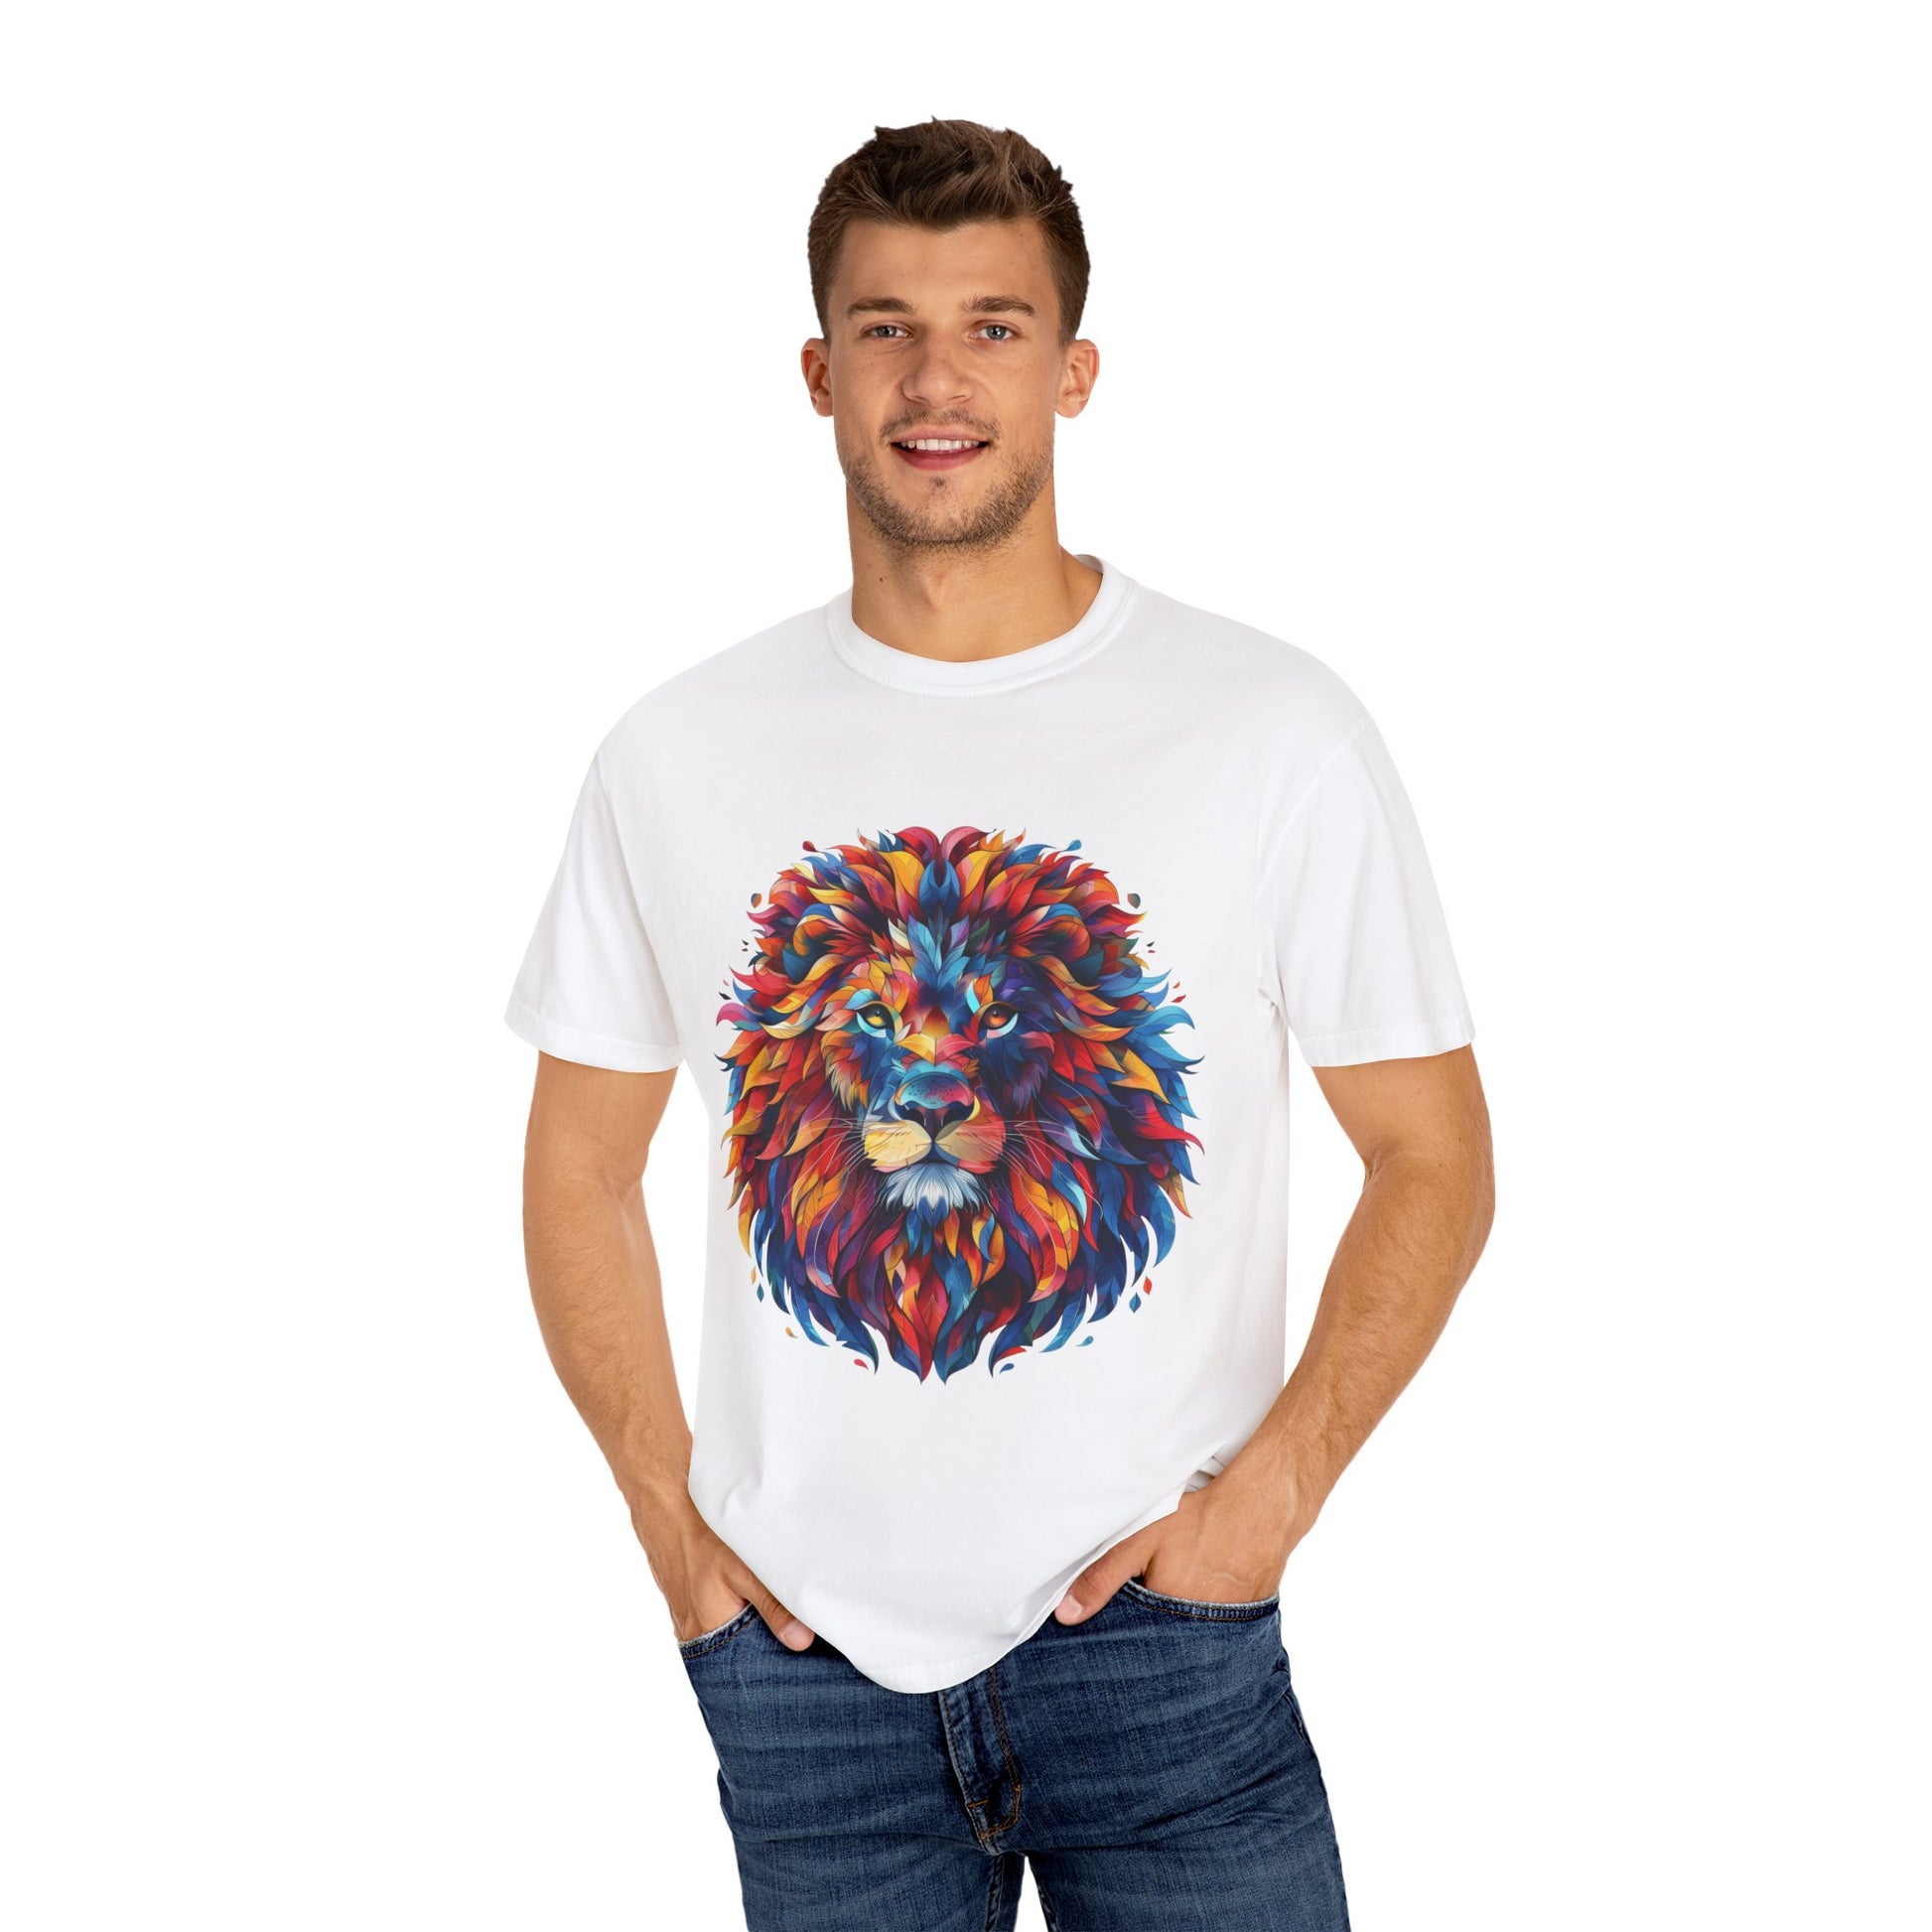 Lion Head Cool Graphic Design Novelty Unisex Garment-dyed T-shirt Cotton Funny Humorous Graphic Soft Premium Unisex Men Women White T-shirt Birthday Gift-24